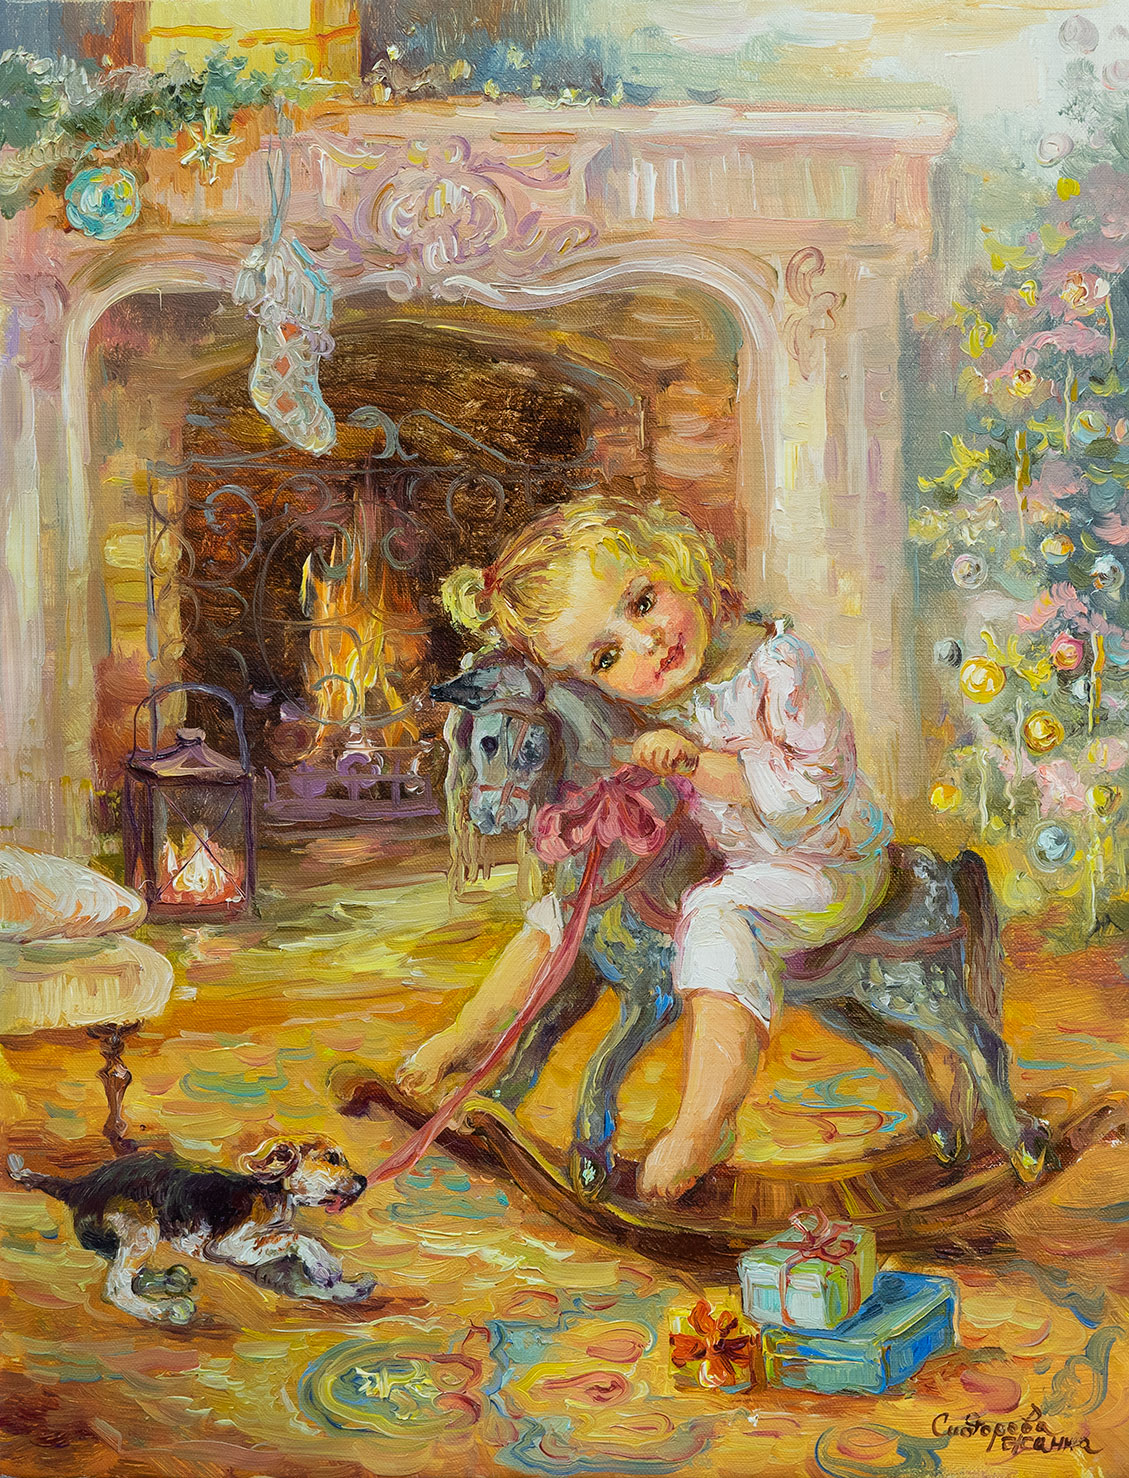 New Year's Dreams - 1, Zhanna Sidorova, Buy the painting Oil